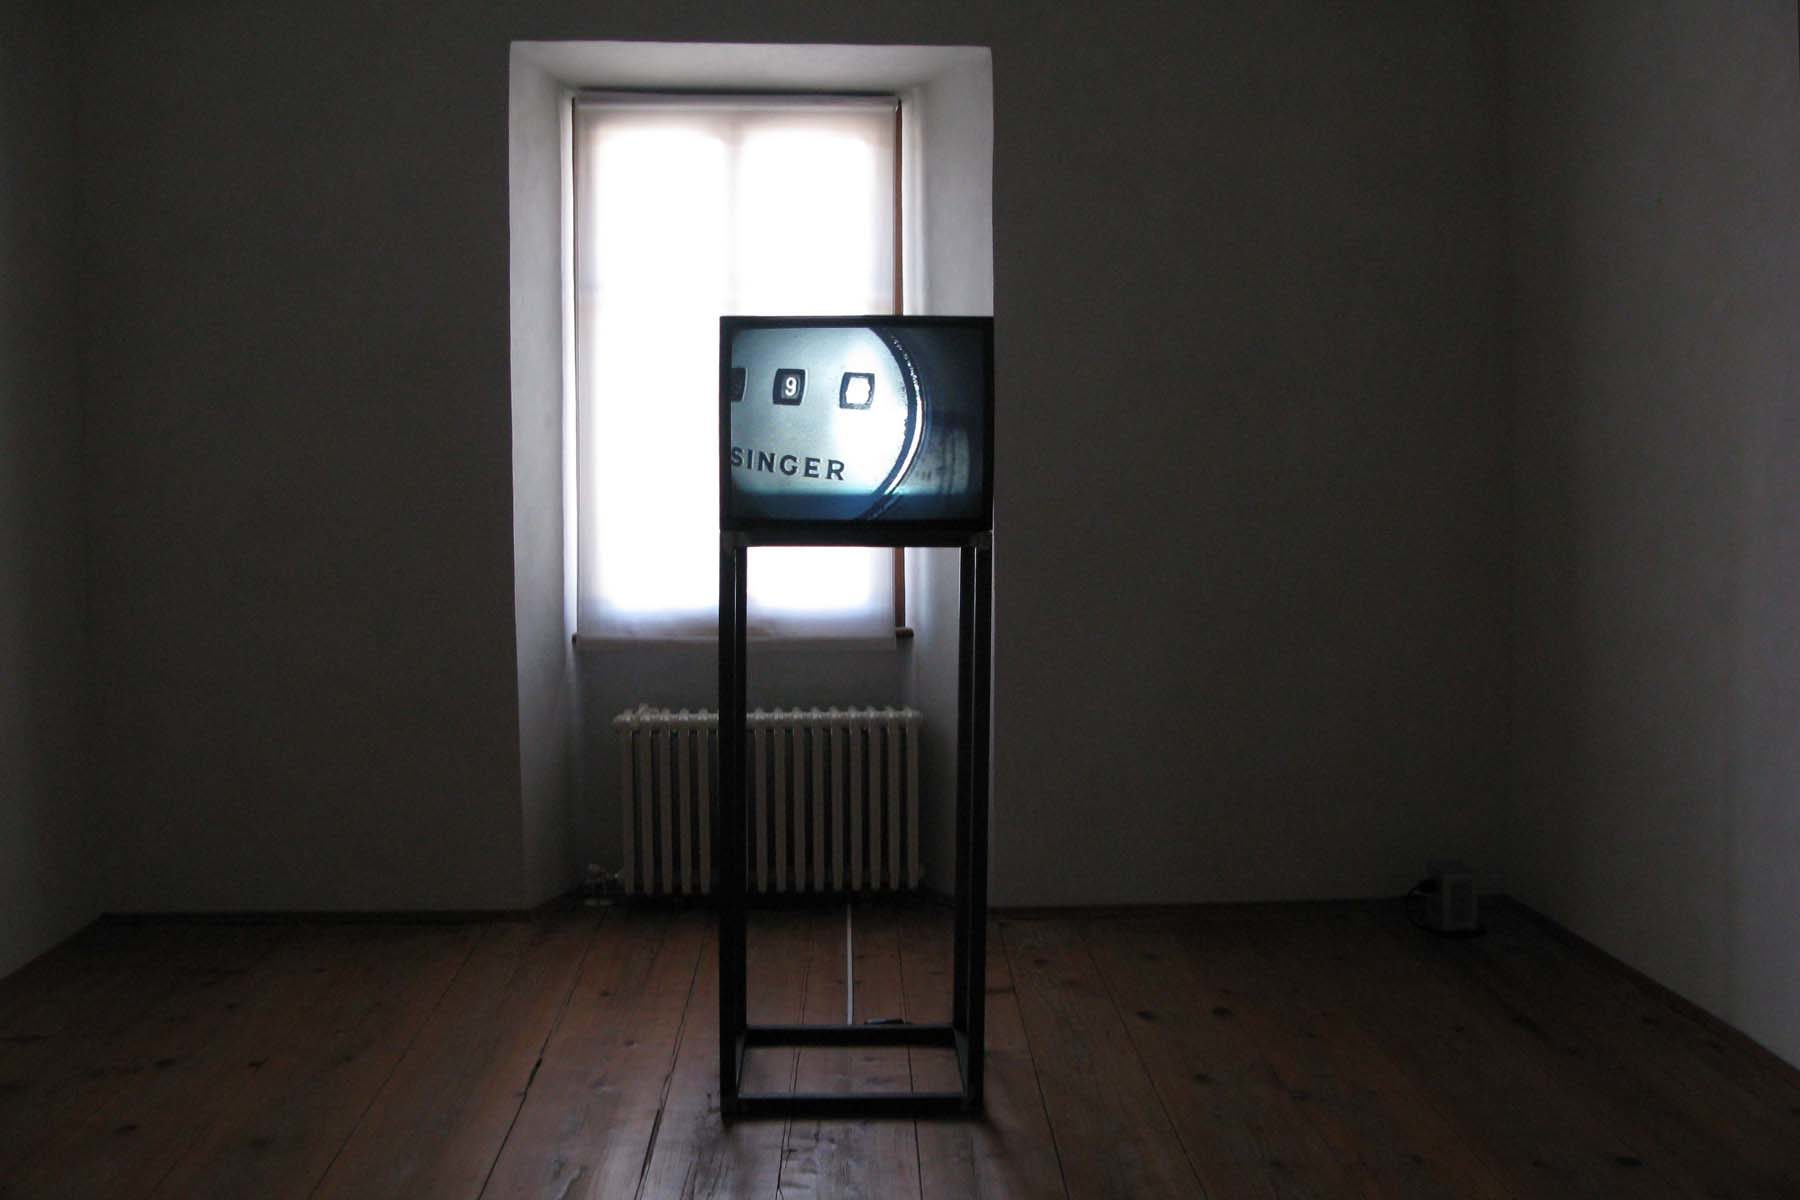 Jacopo Mazzonelli, Organico, 2010, mixed media, installation view